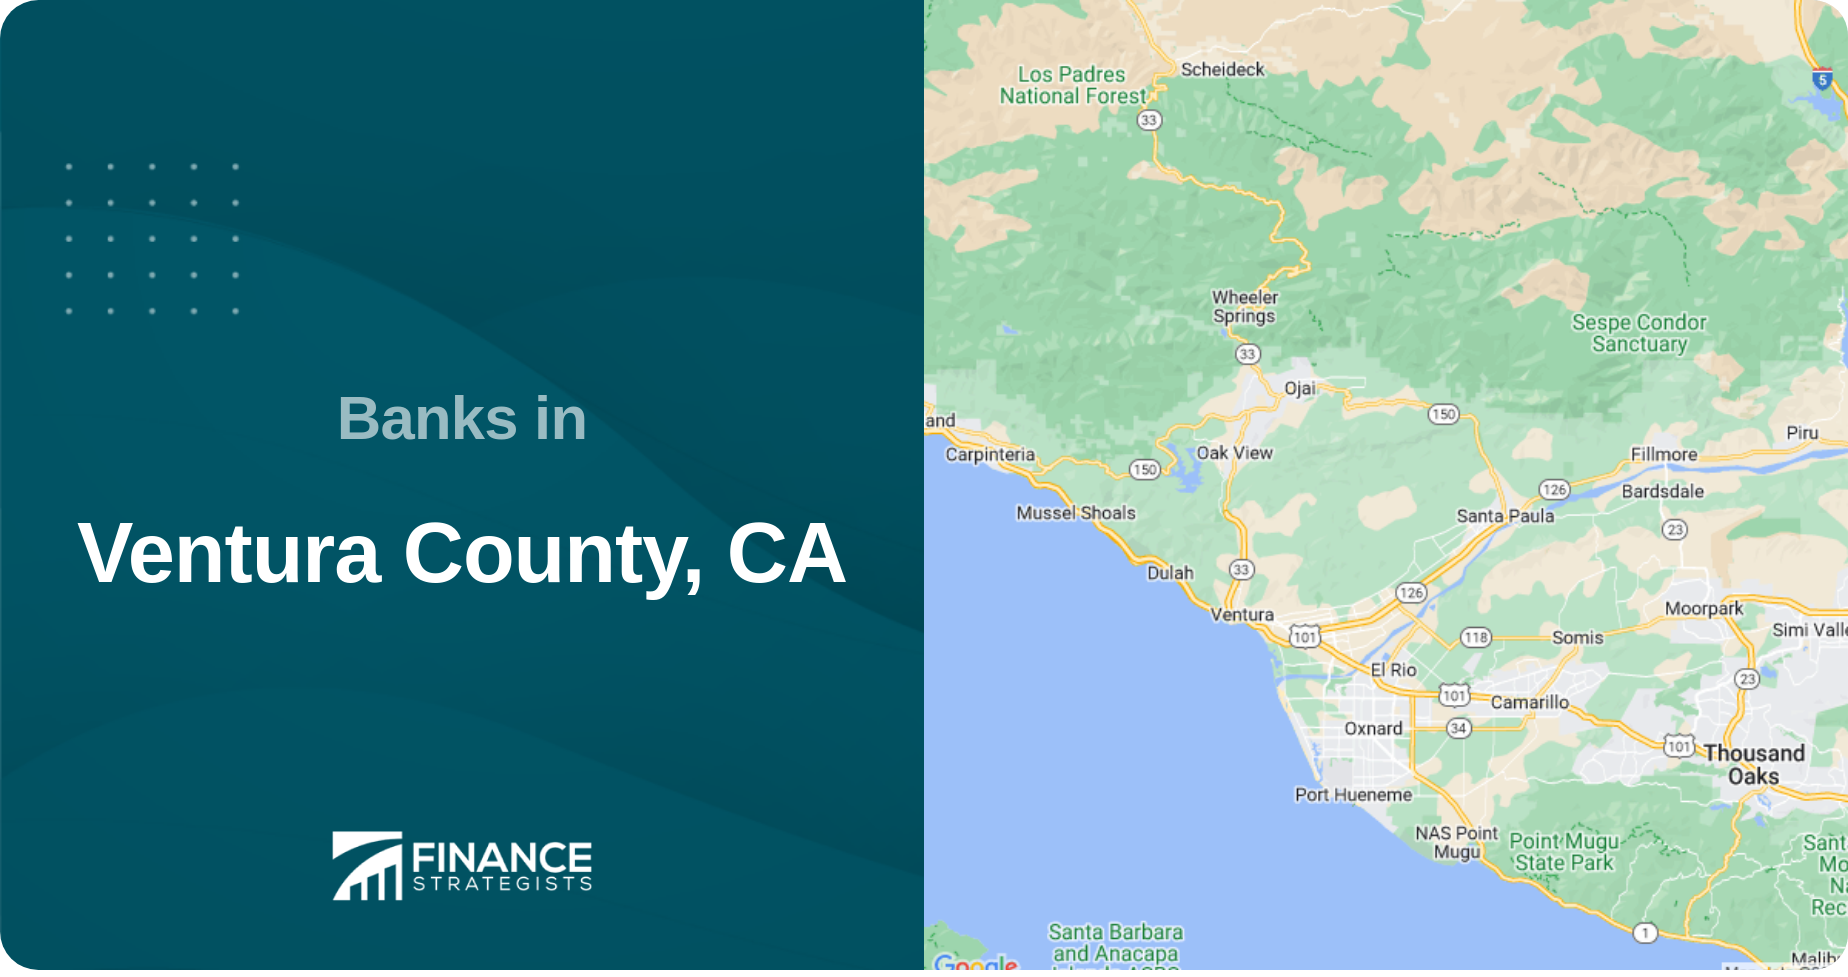 Banks in Ventura County, CA